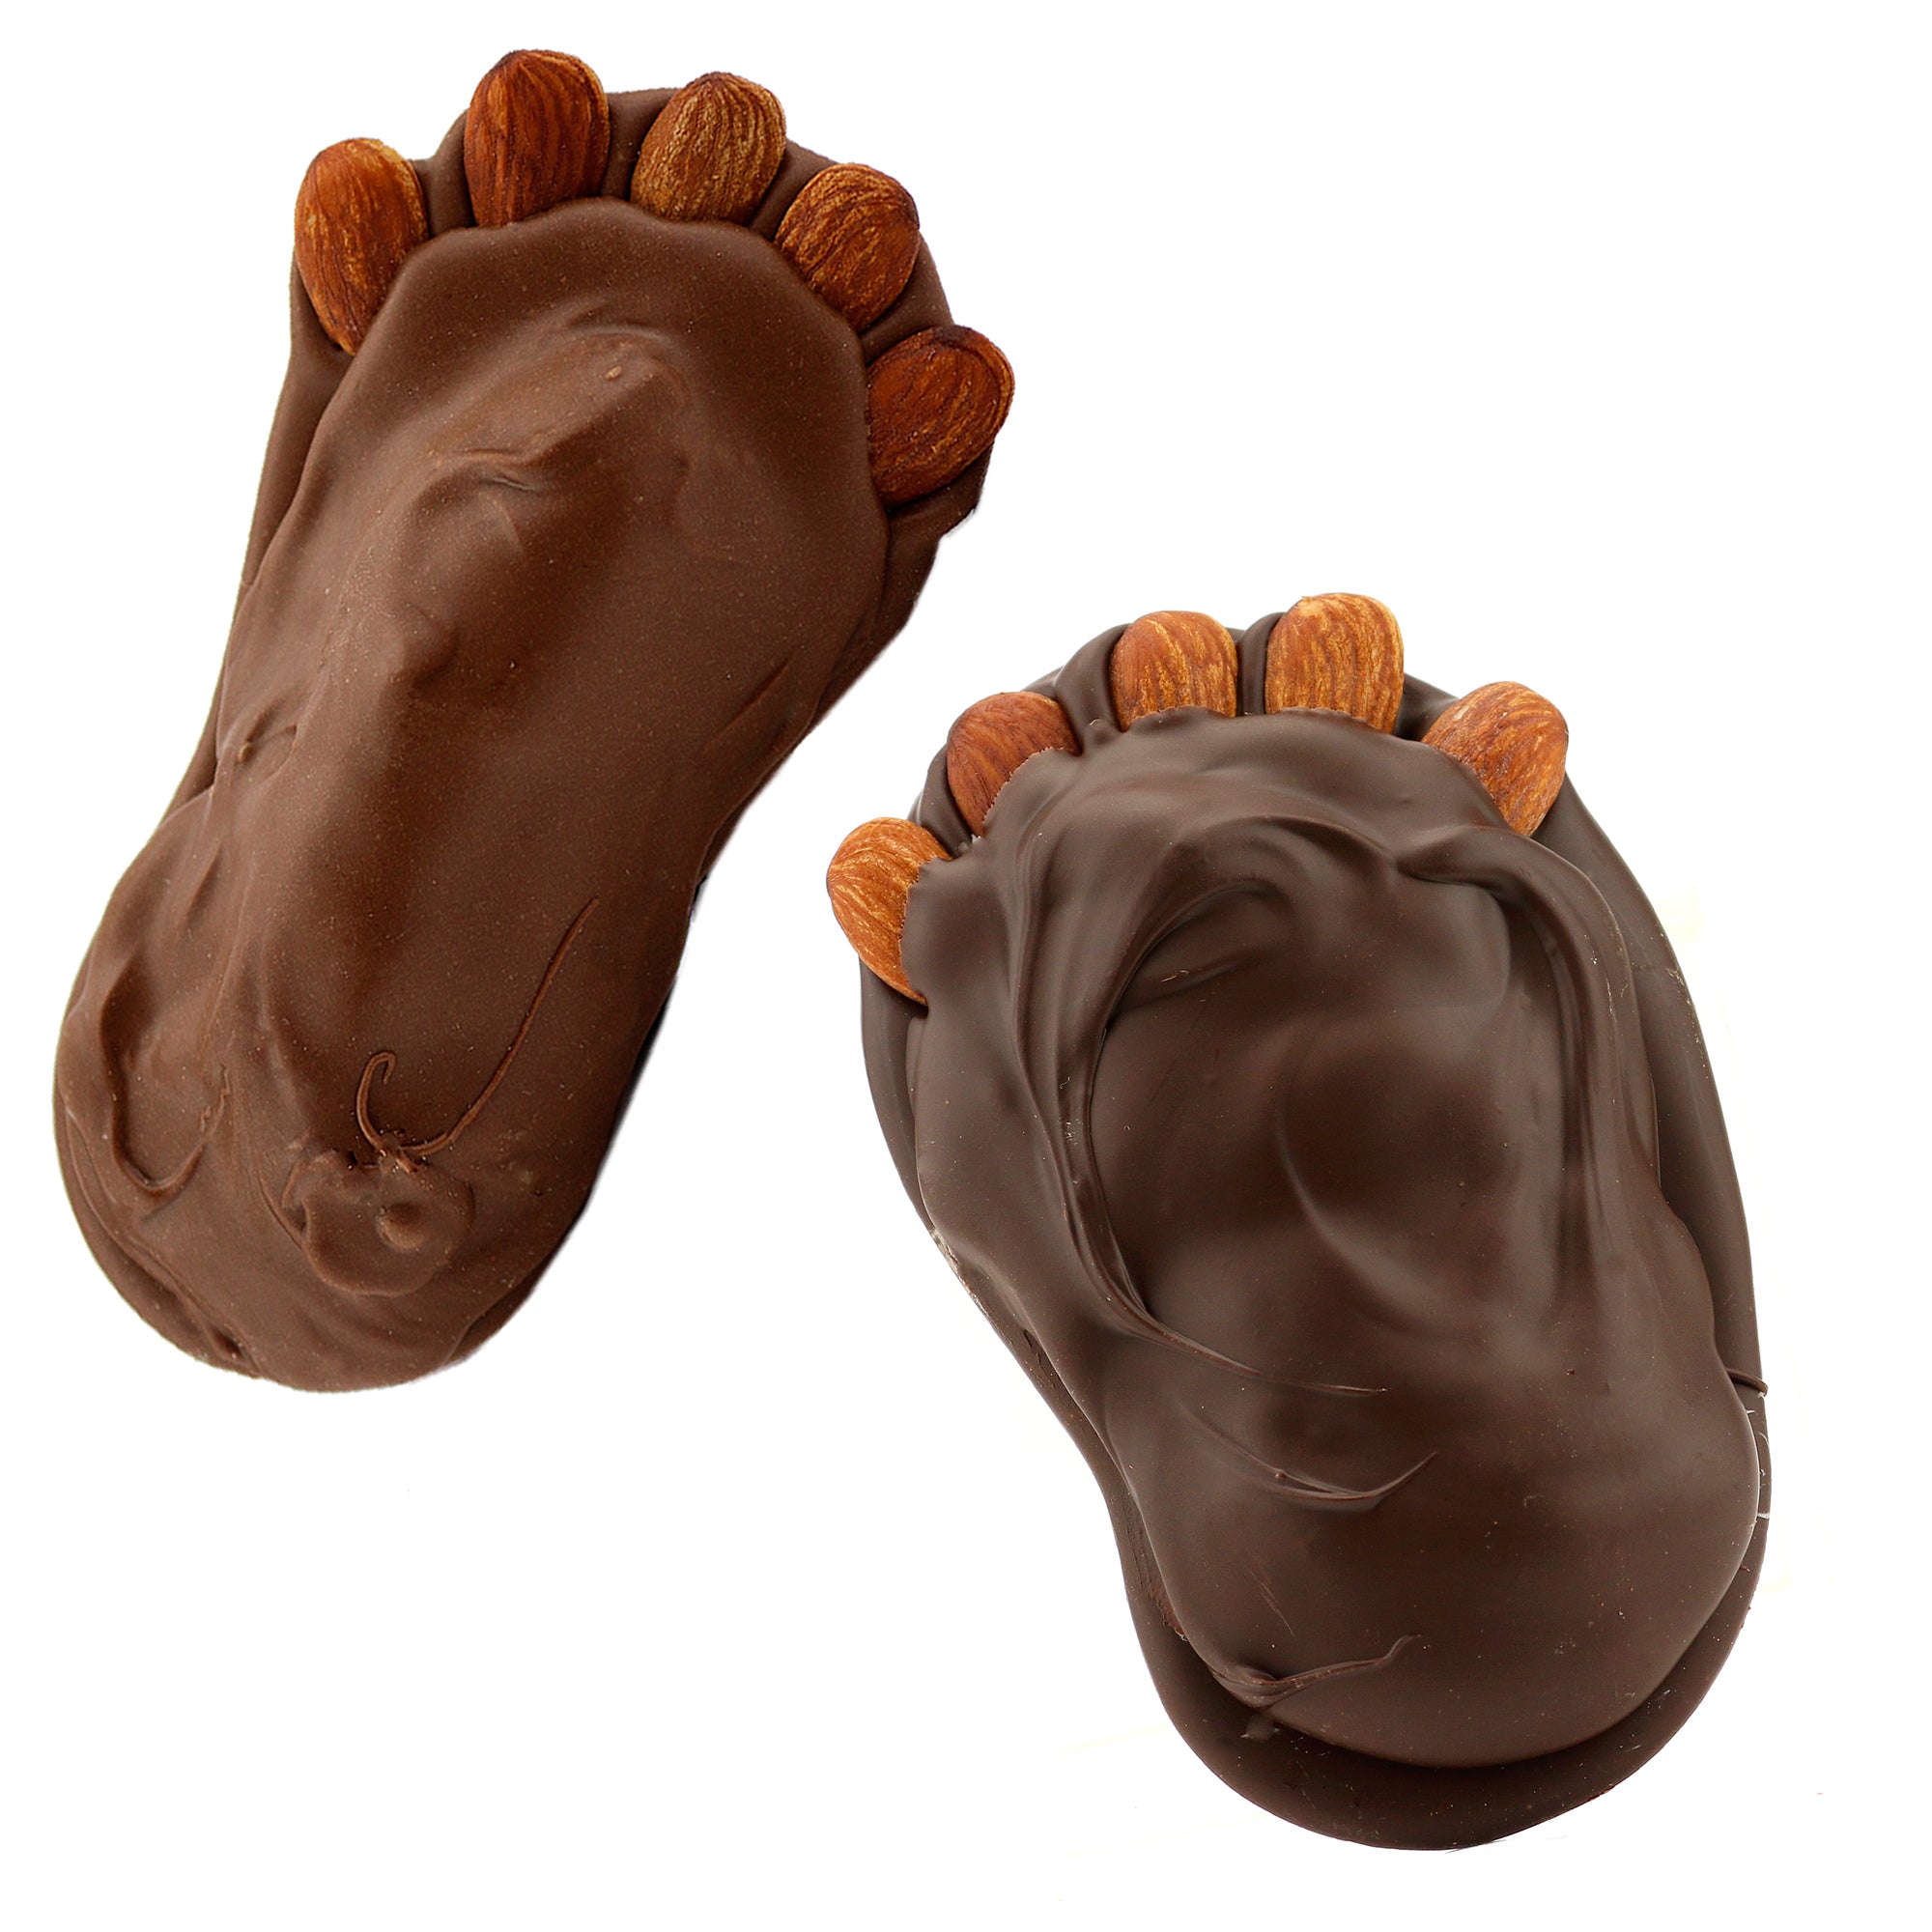 Chocolate Bigfoot (Milk or Dark) 4 oz.